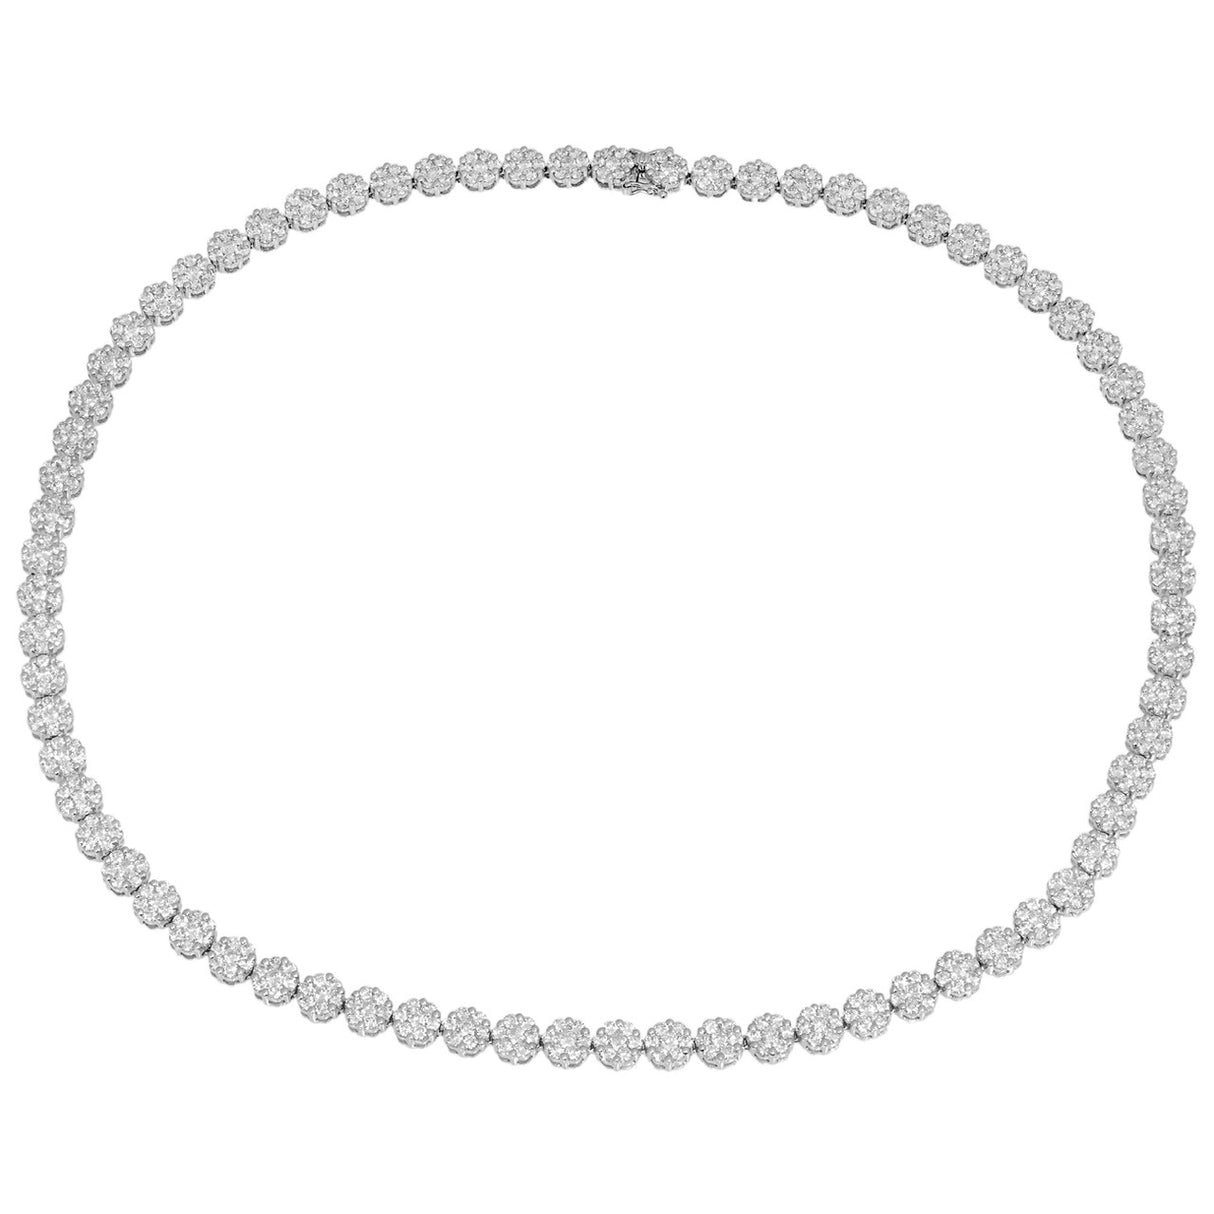 18K White Gold 12.06 Carat Diamond Riviere Necklace